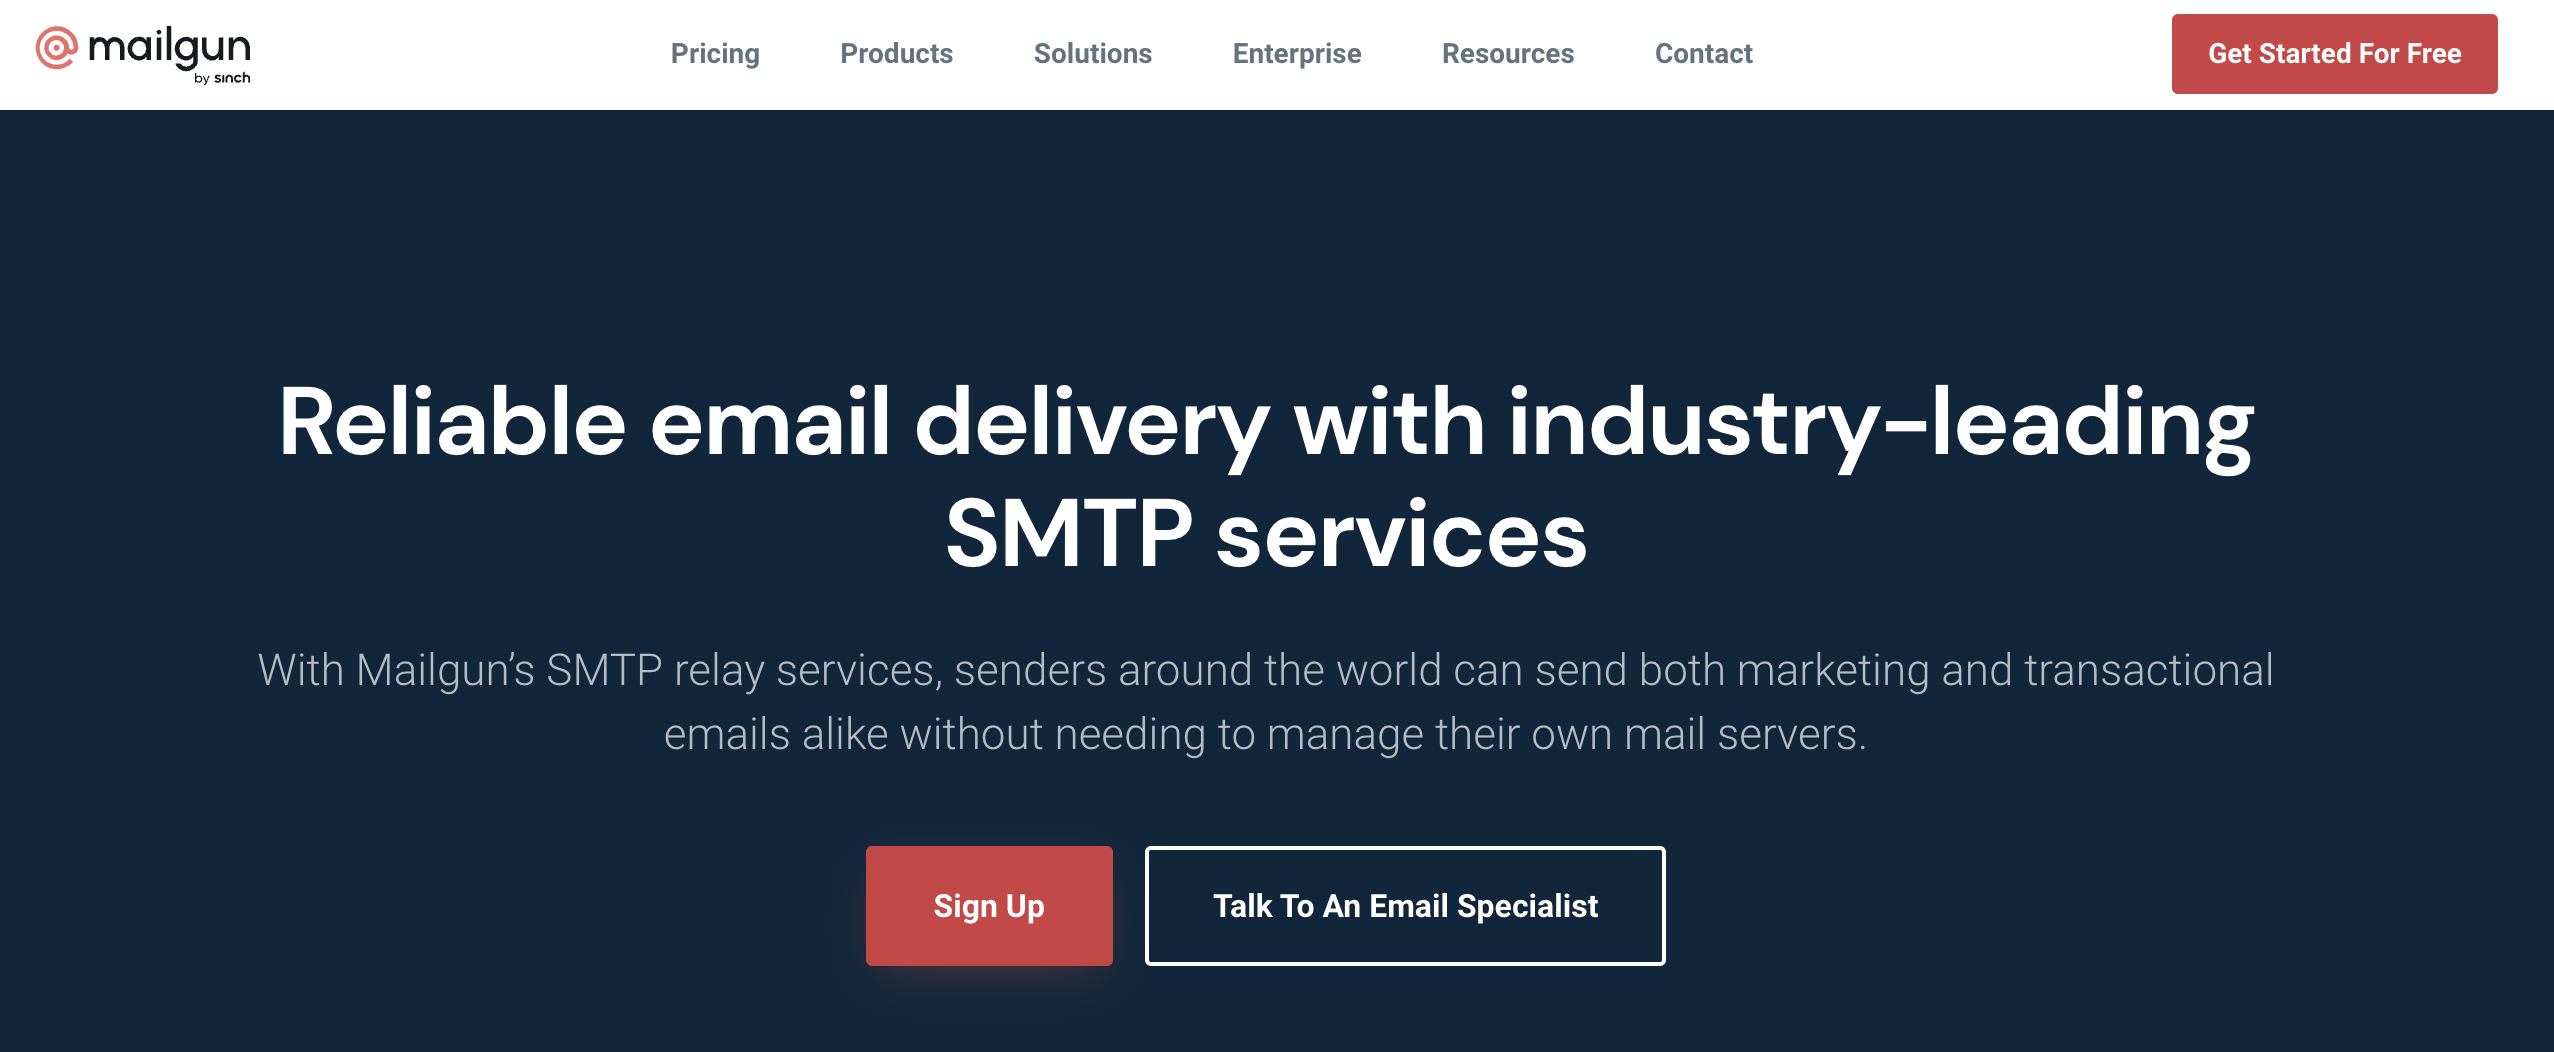 Mailgun SMTP service home page